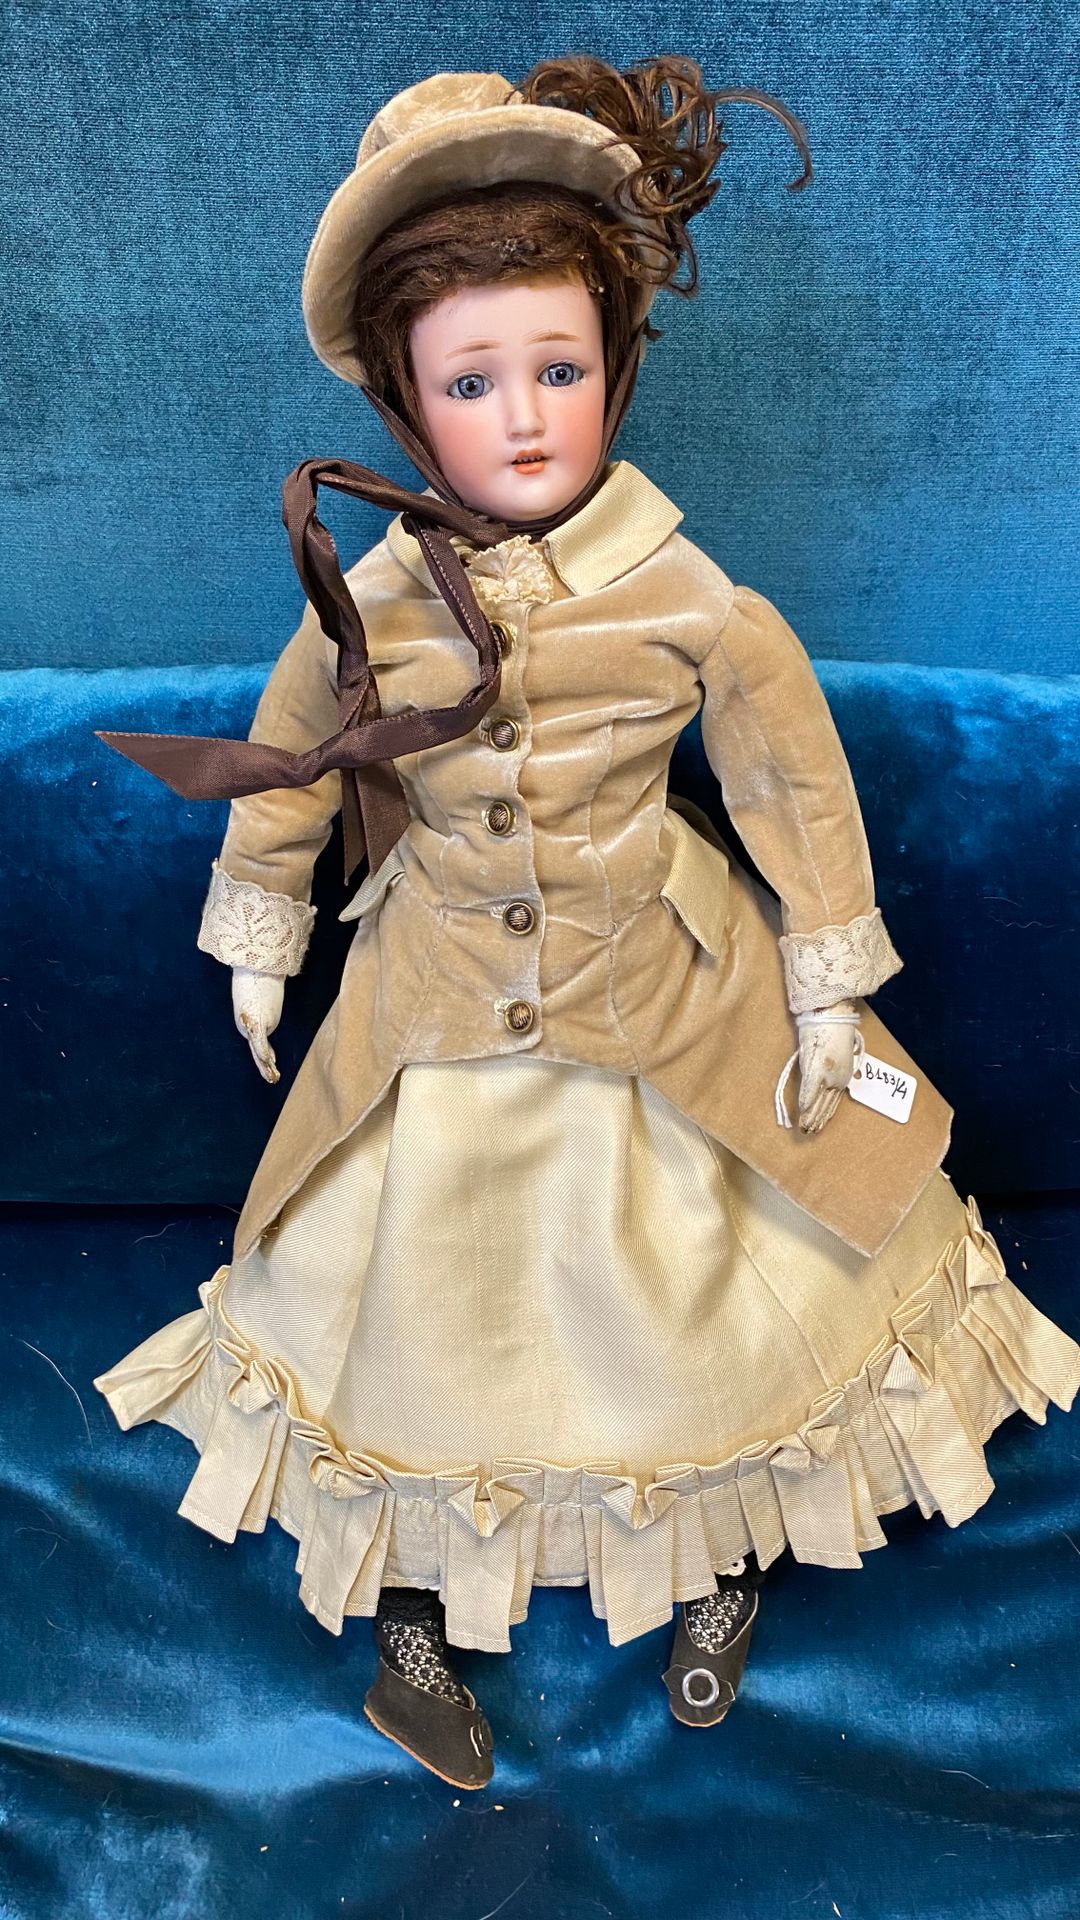 Null 巴黎人类型的娃娃，头部是双色的。

构成中的衔接体。

H.42厘米

(磨损)